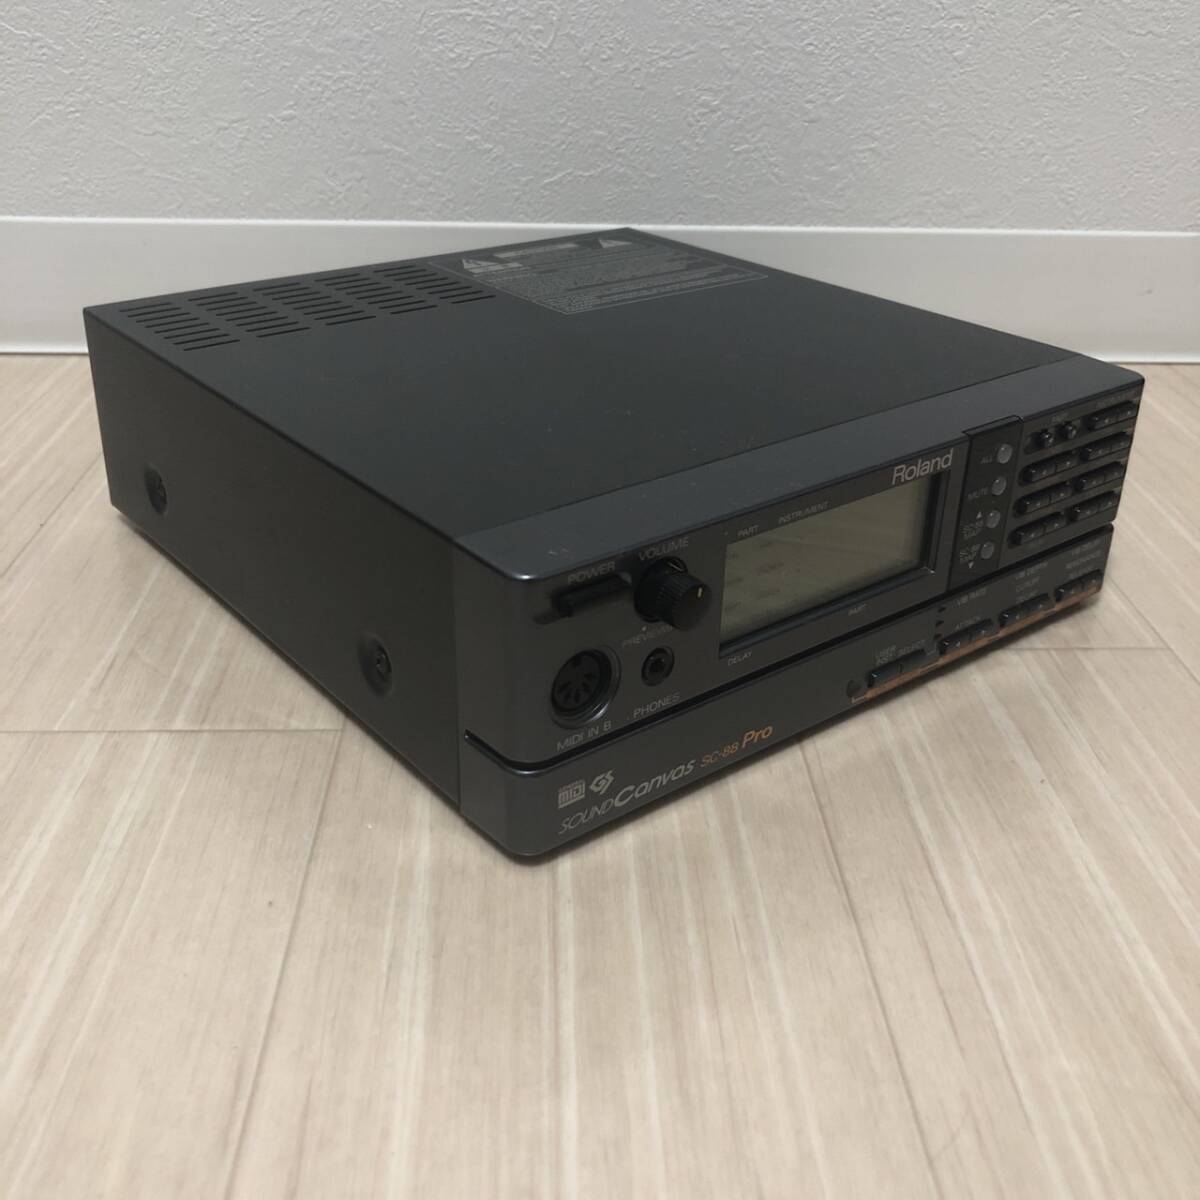 [ junk ] Roland sound module SC-88 pro Roland Mu ji. Roland electrification only verification DTM-88PW